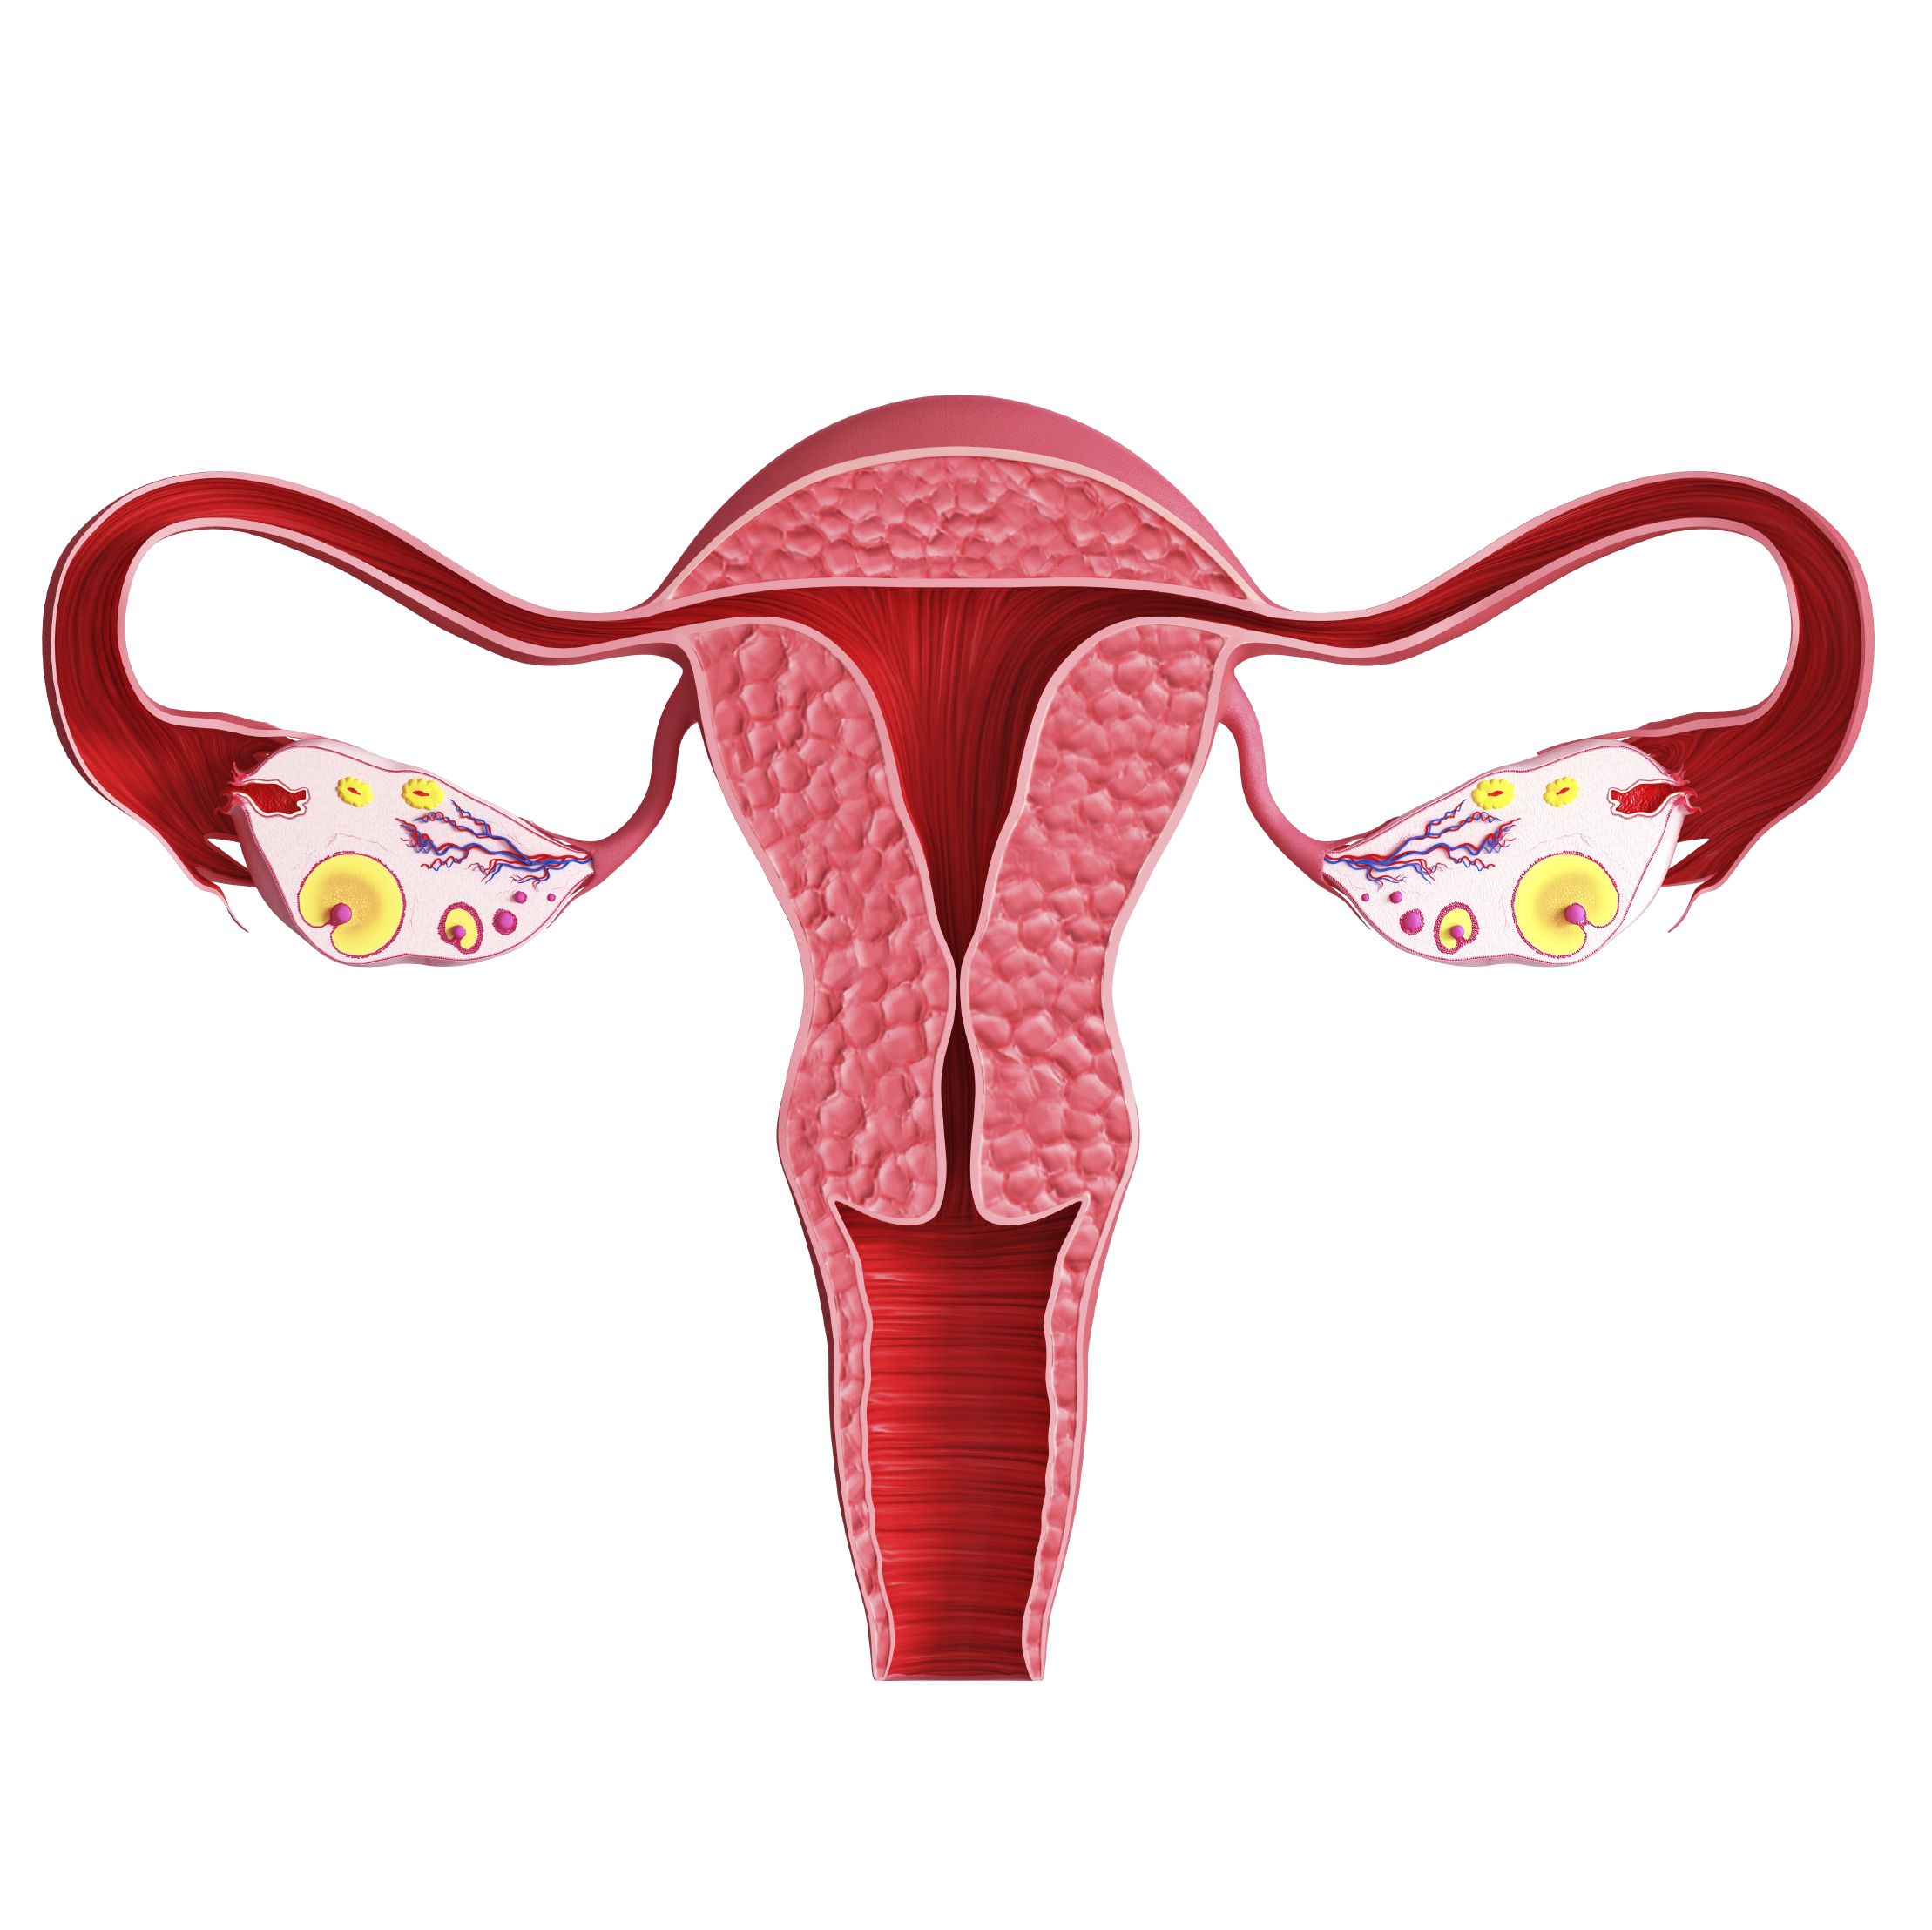 Polycystisk ovariesyndrom betyr at hormonene ikke er i balanse.